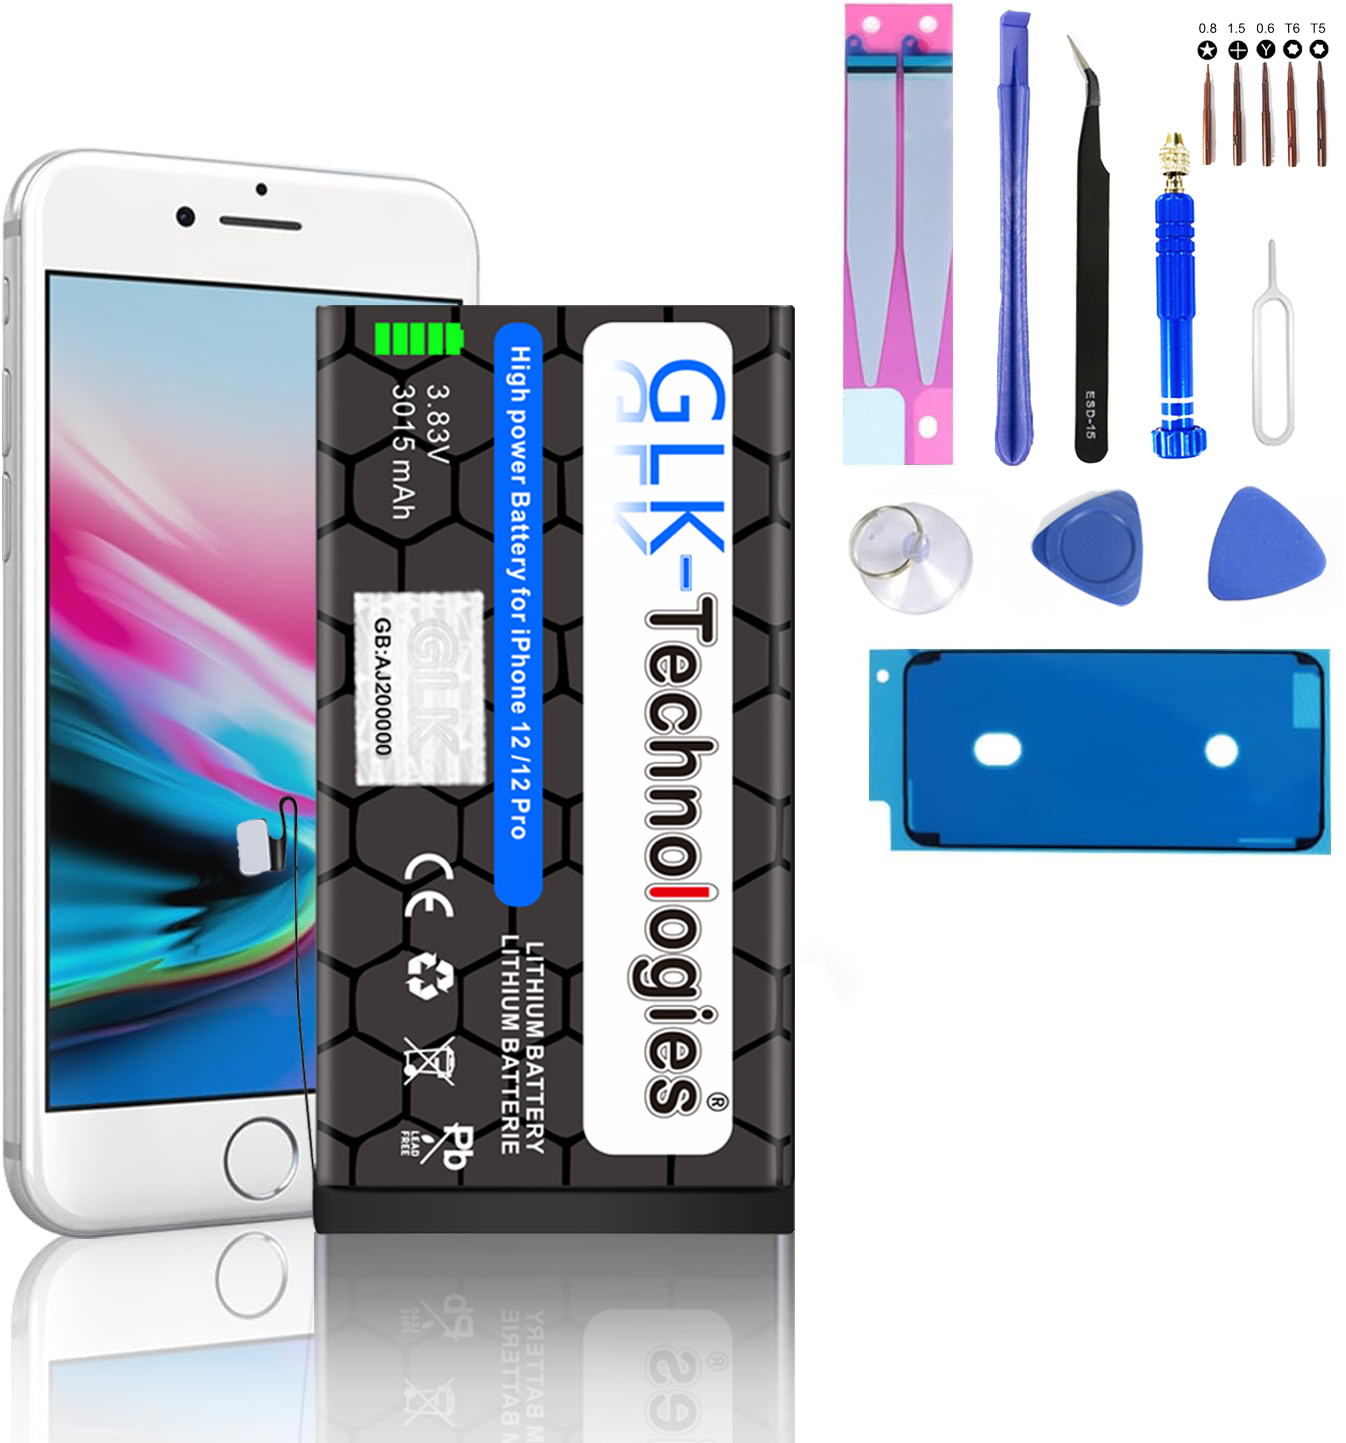 12 Lithium-Ionen-Akku / Phone 3015 Werkzeug mAh ink. 12 Akku, Pro GLK-TECHNOLOGIES